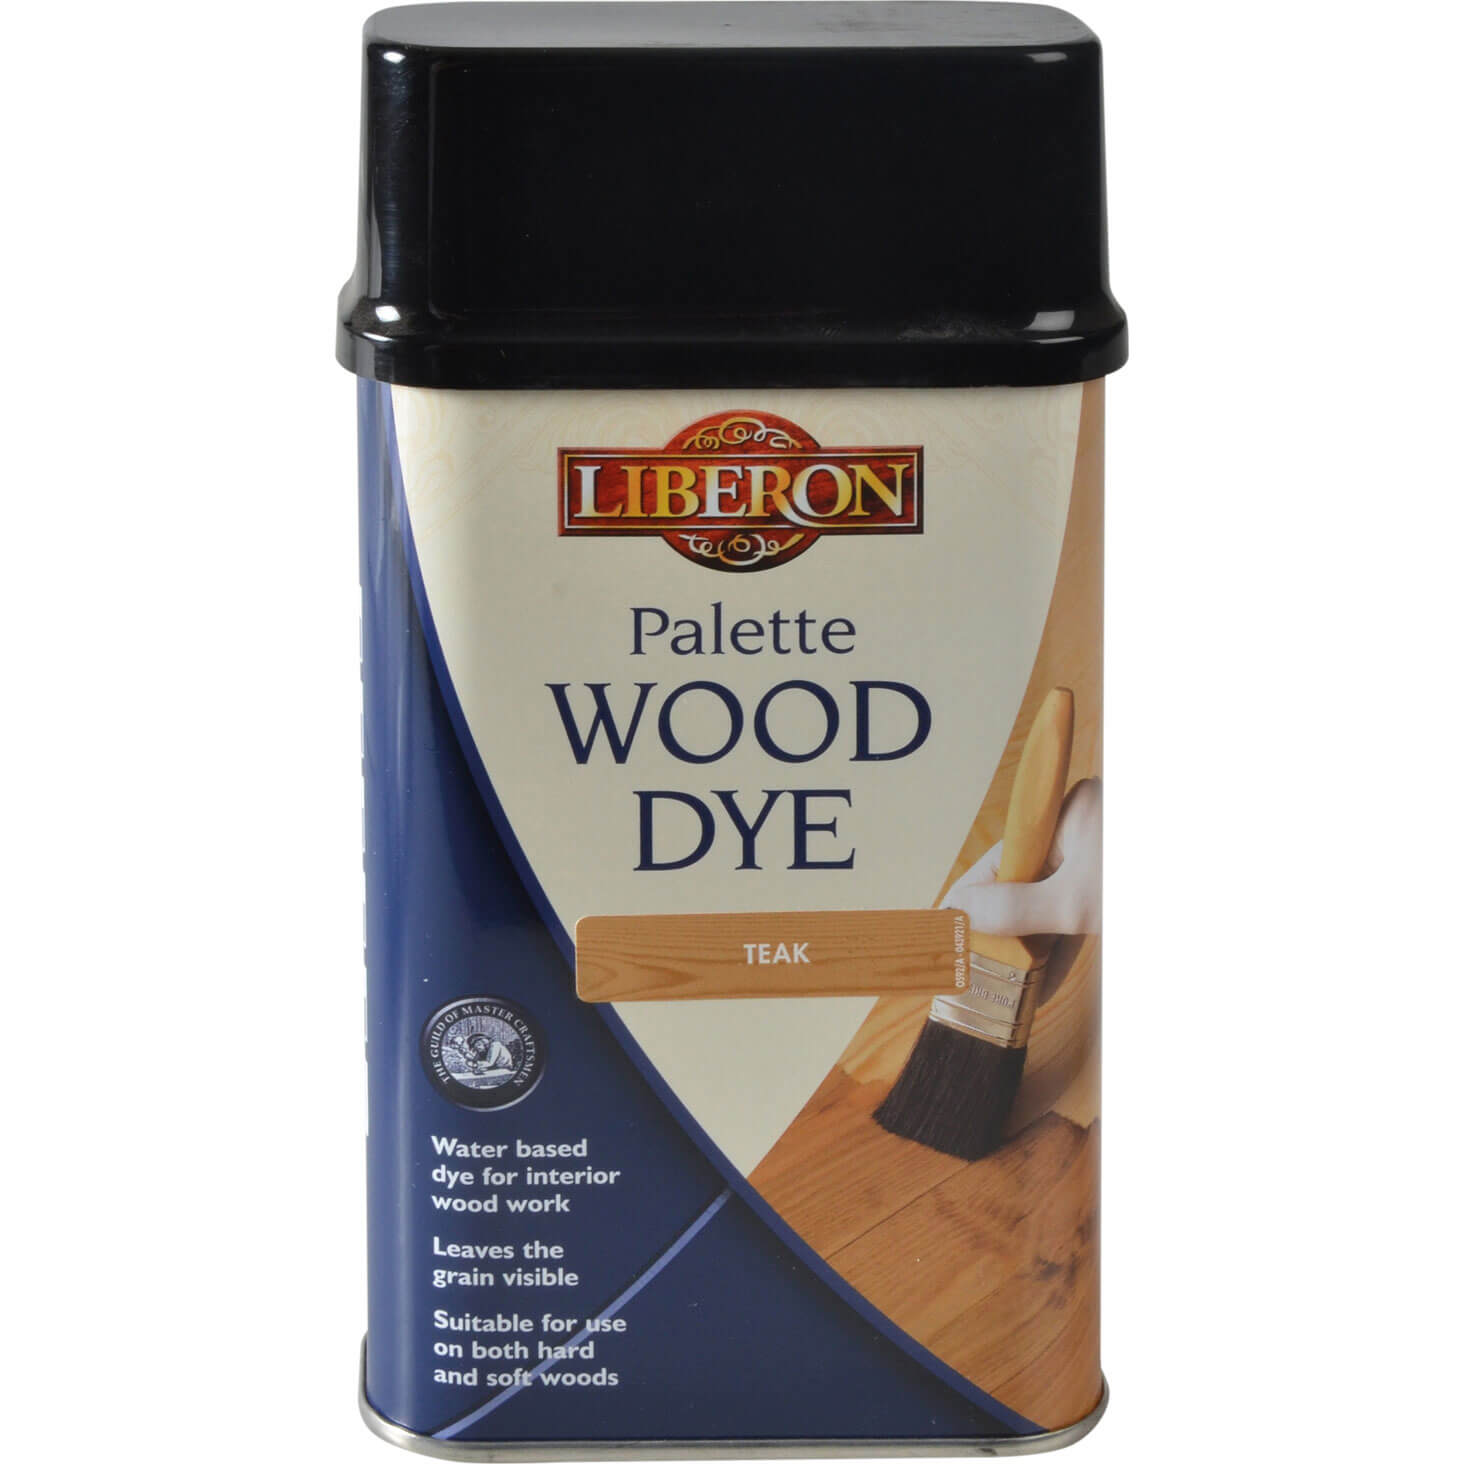 Image of Liberon Palette Wood Dye Teak 500ml